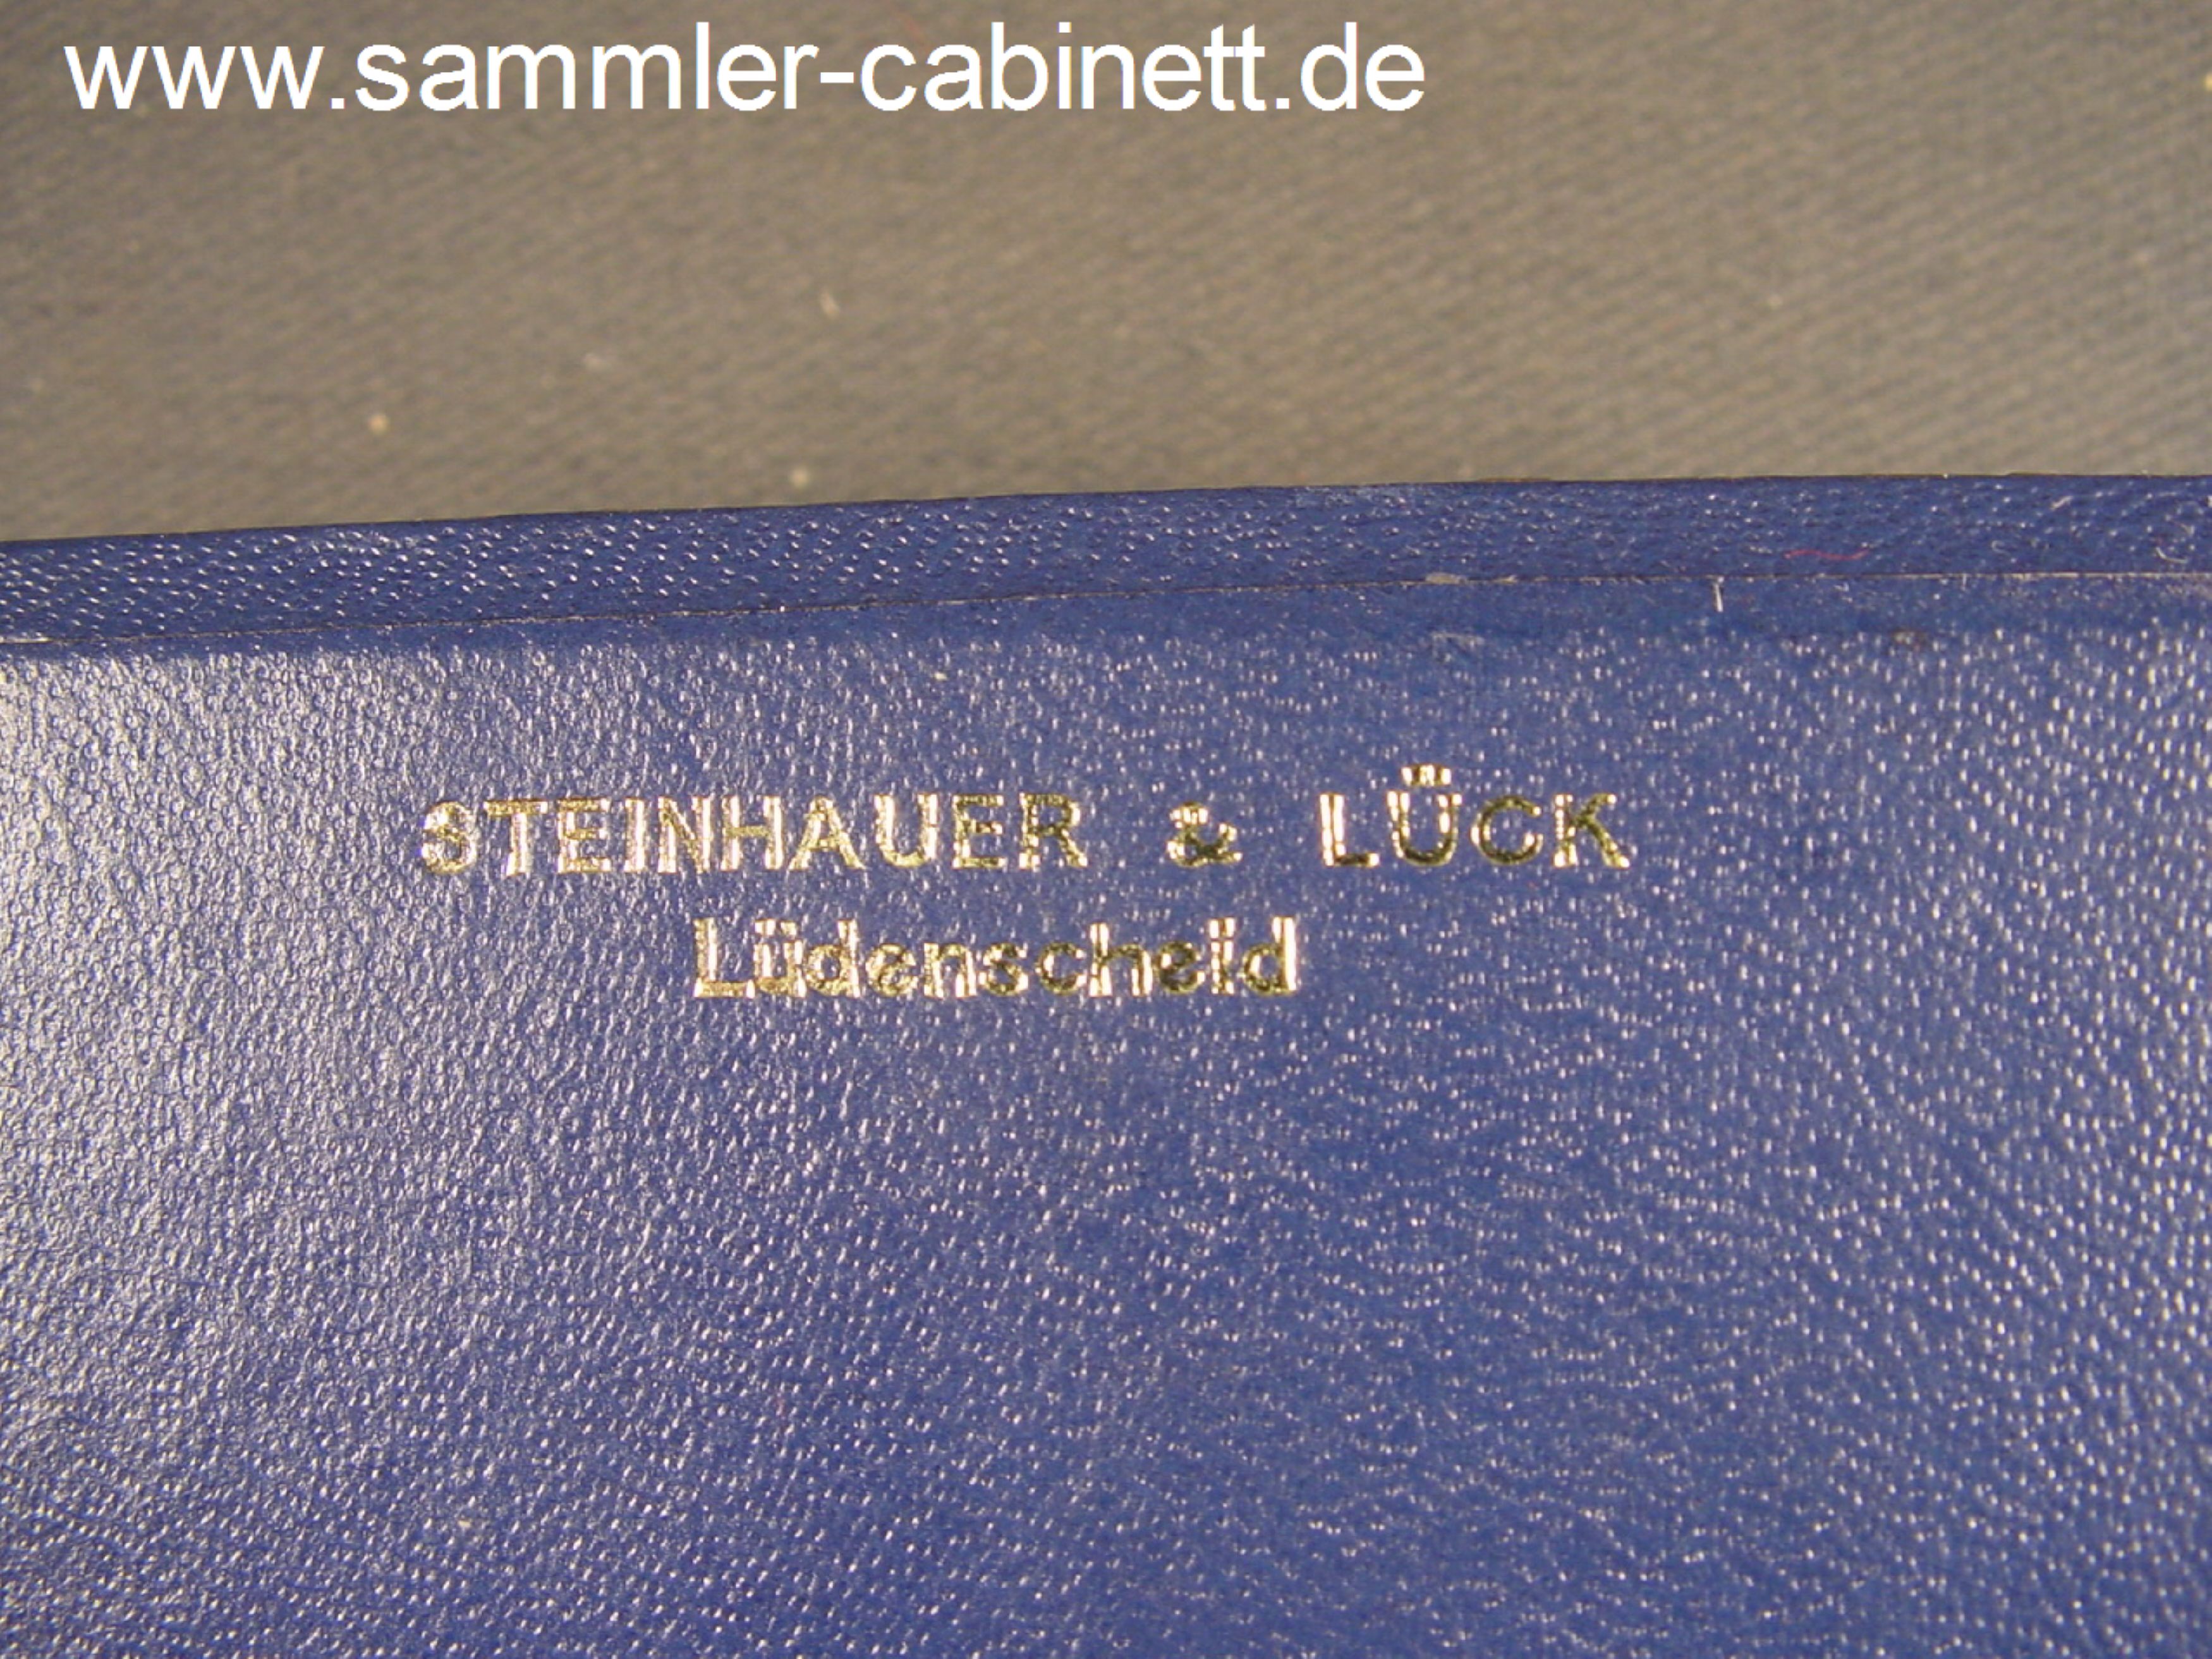 BRD - Bundesverdienstorden - Verdienstkreuz 1. Kl. - ...